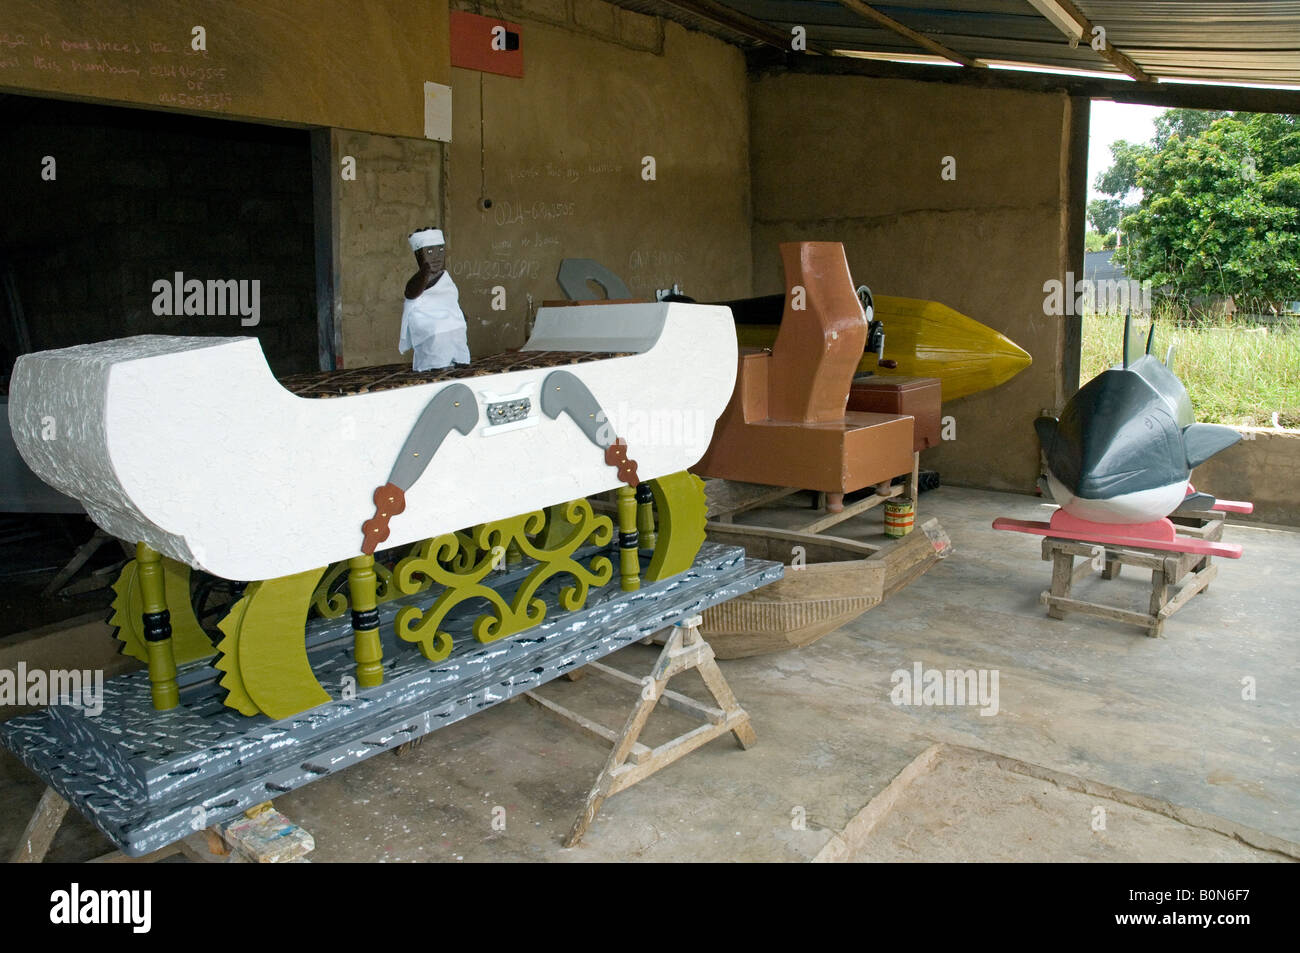 Coffins shaped like a boat, plane, pawpaw and fish on display, Kuluedor, Ghana Stock Photo